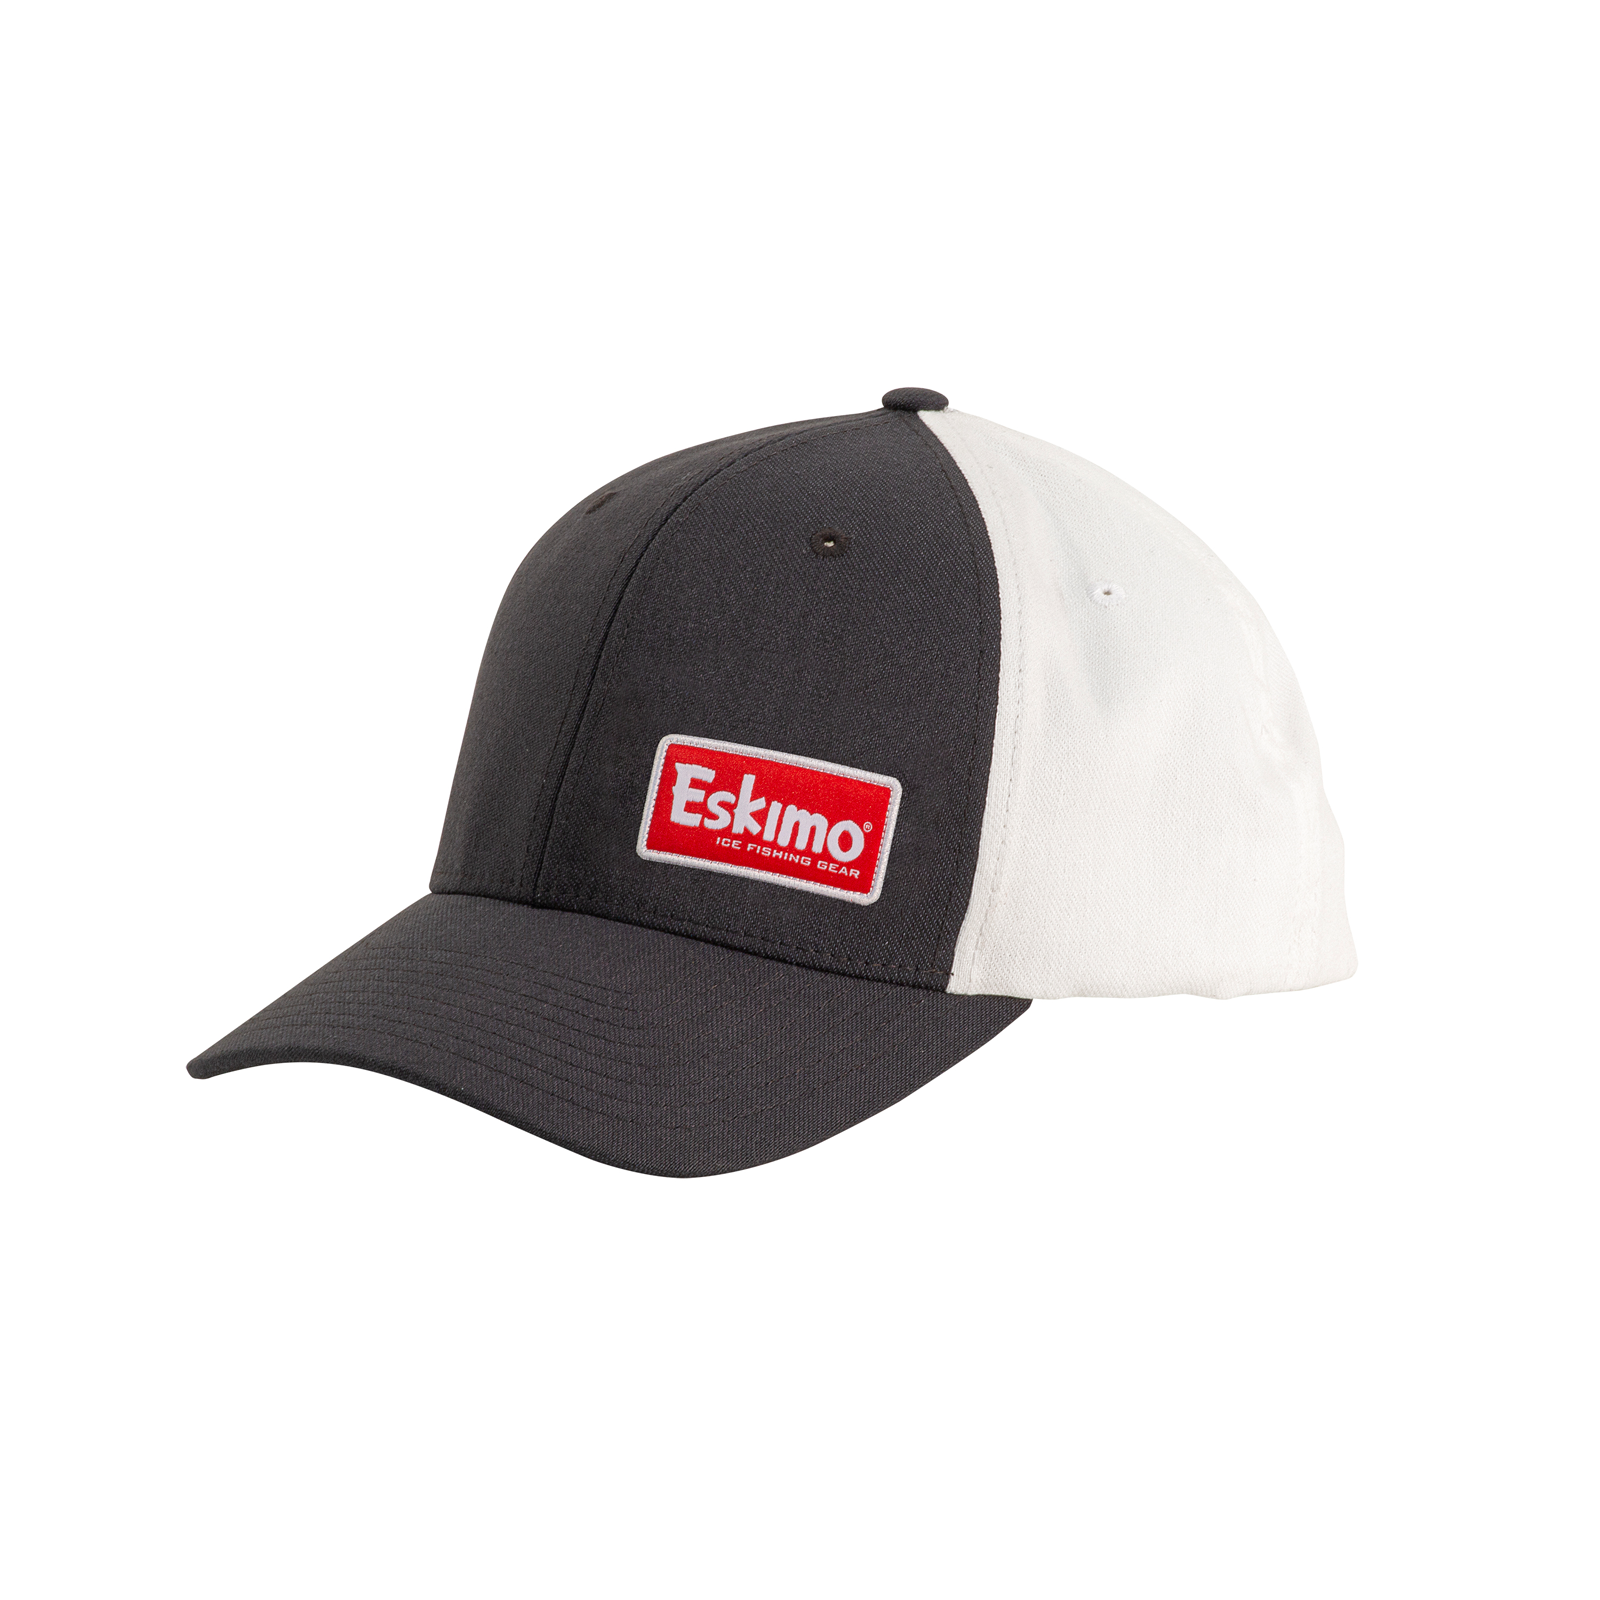 eskimo gray patch cap (2024) - Hats